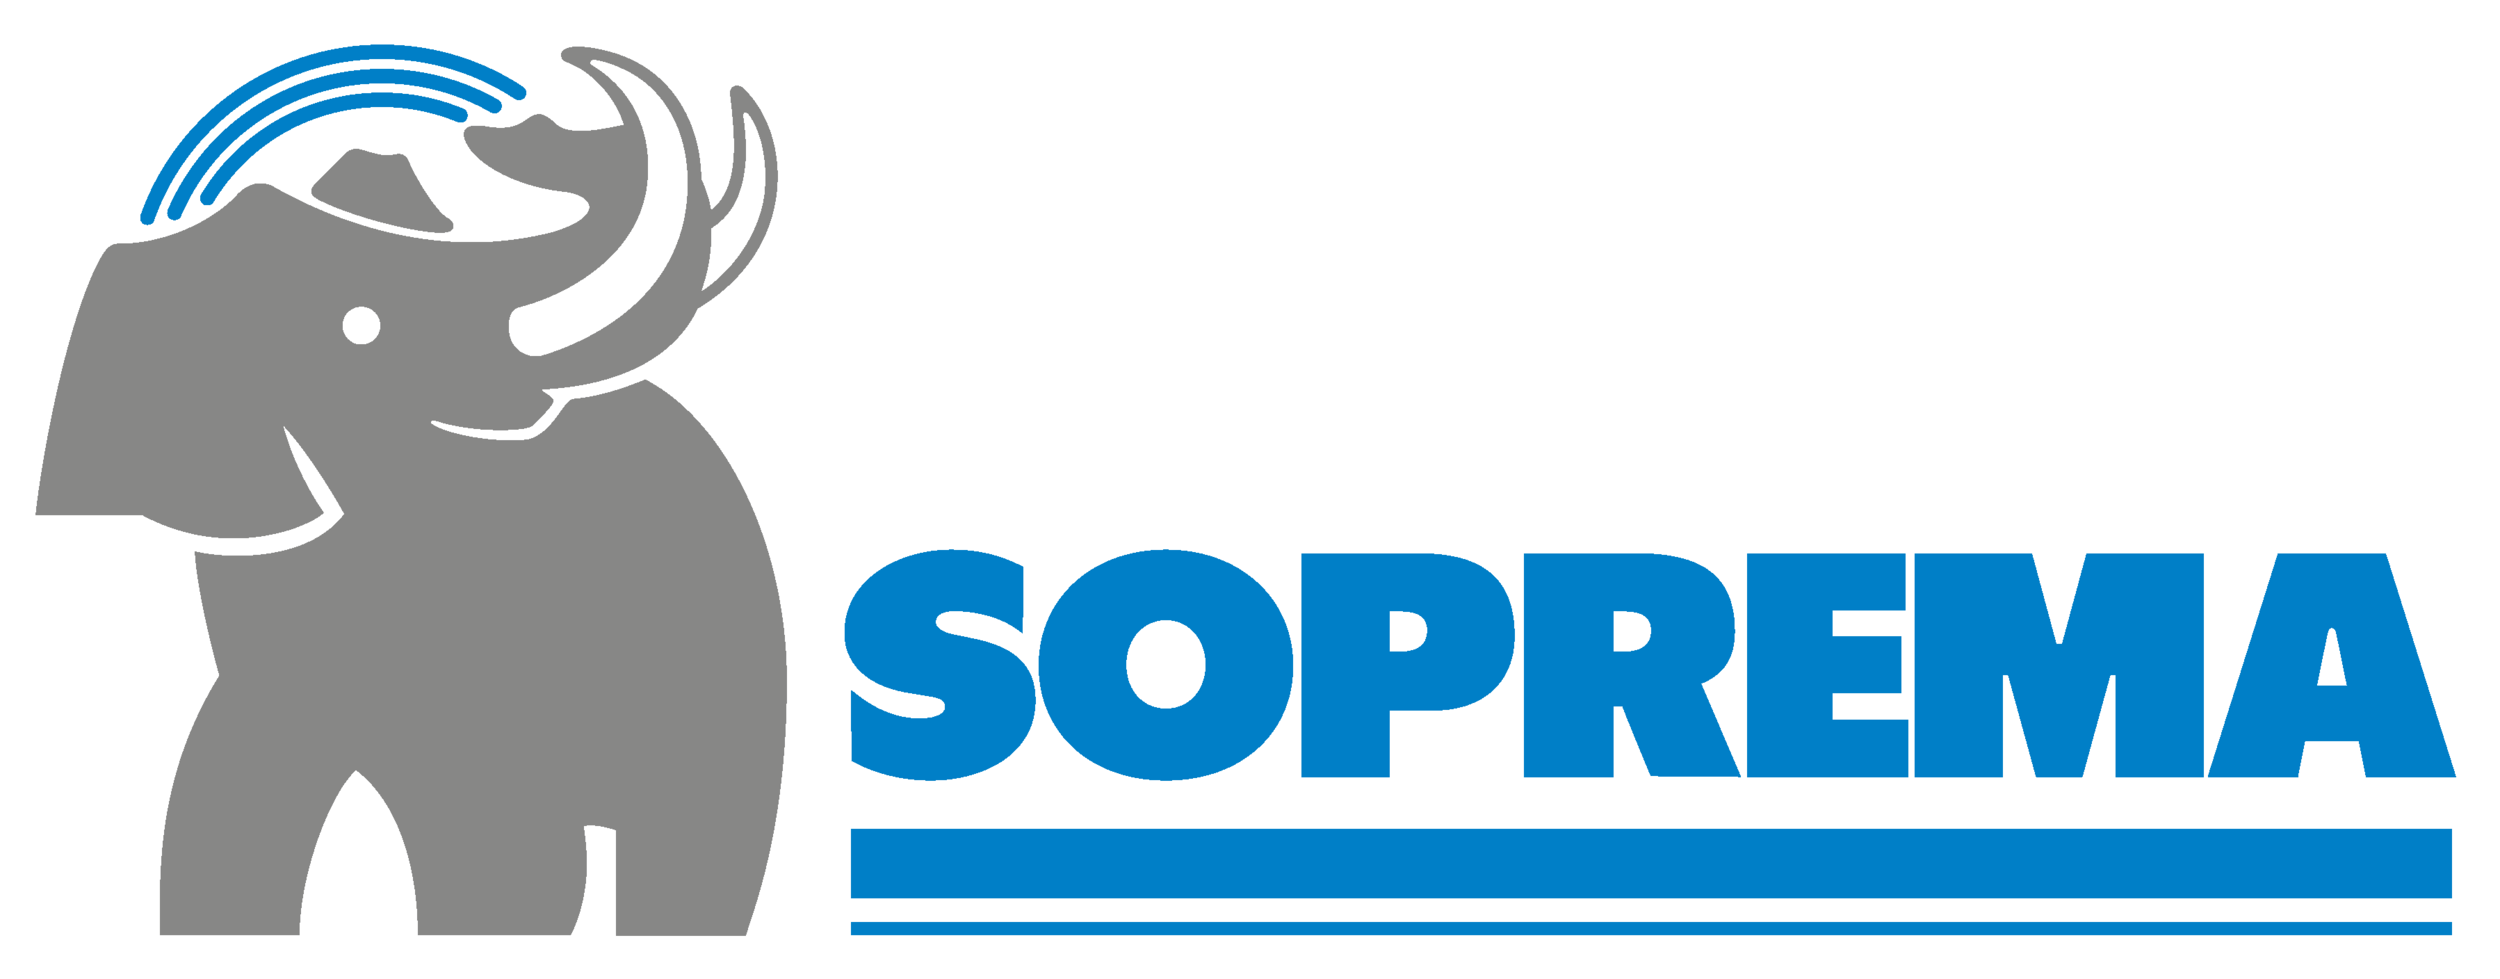 Logo_SOPREMA2c.png